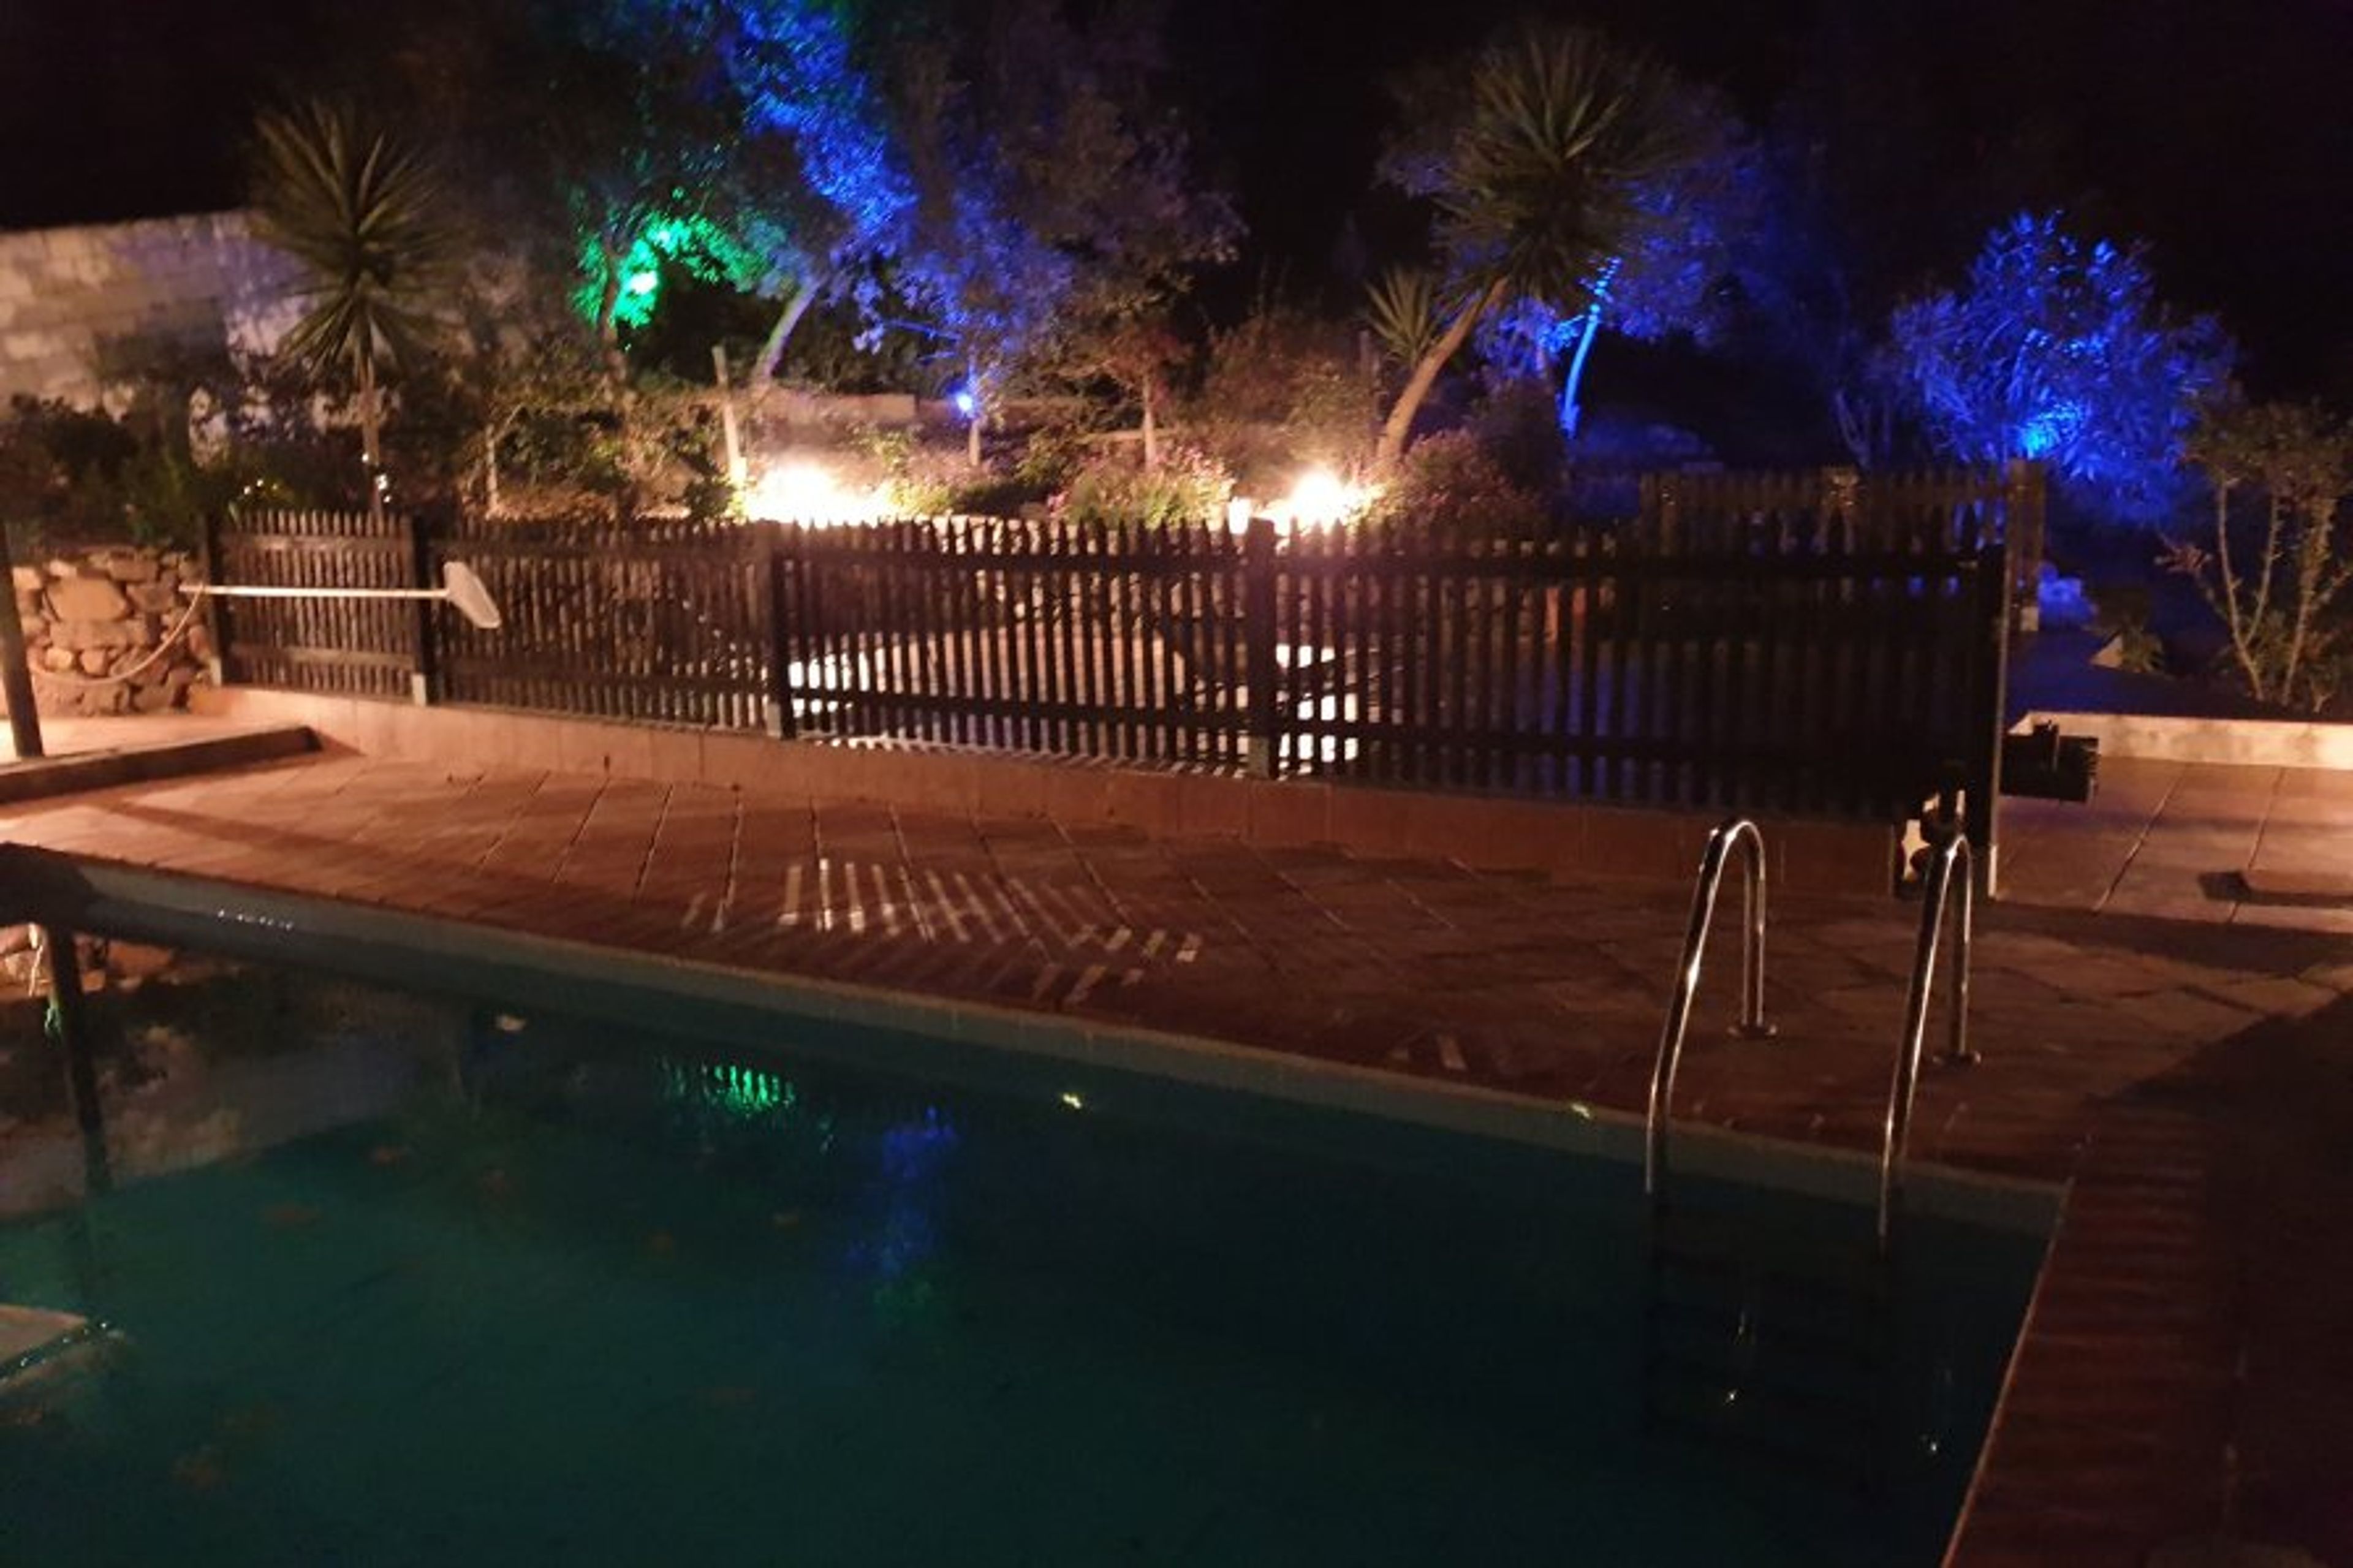 Evening around the pool terrace
